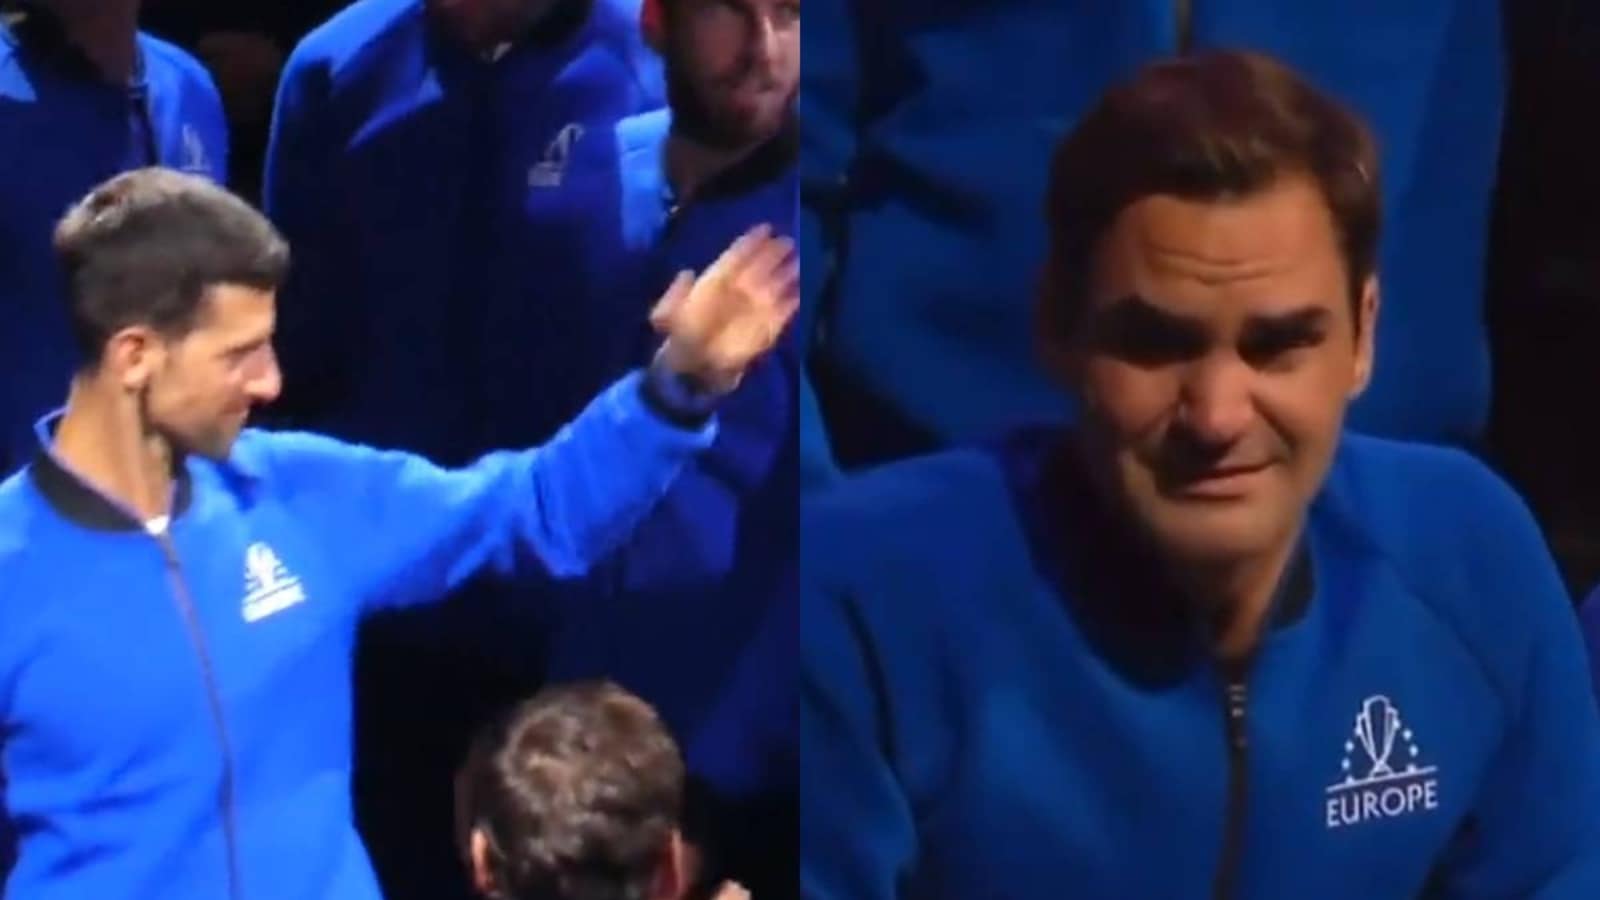 Watch: Novak Djokovic seen initiating memorable Roger Federer retirement gesture after Swiss legend was in tears